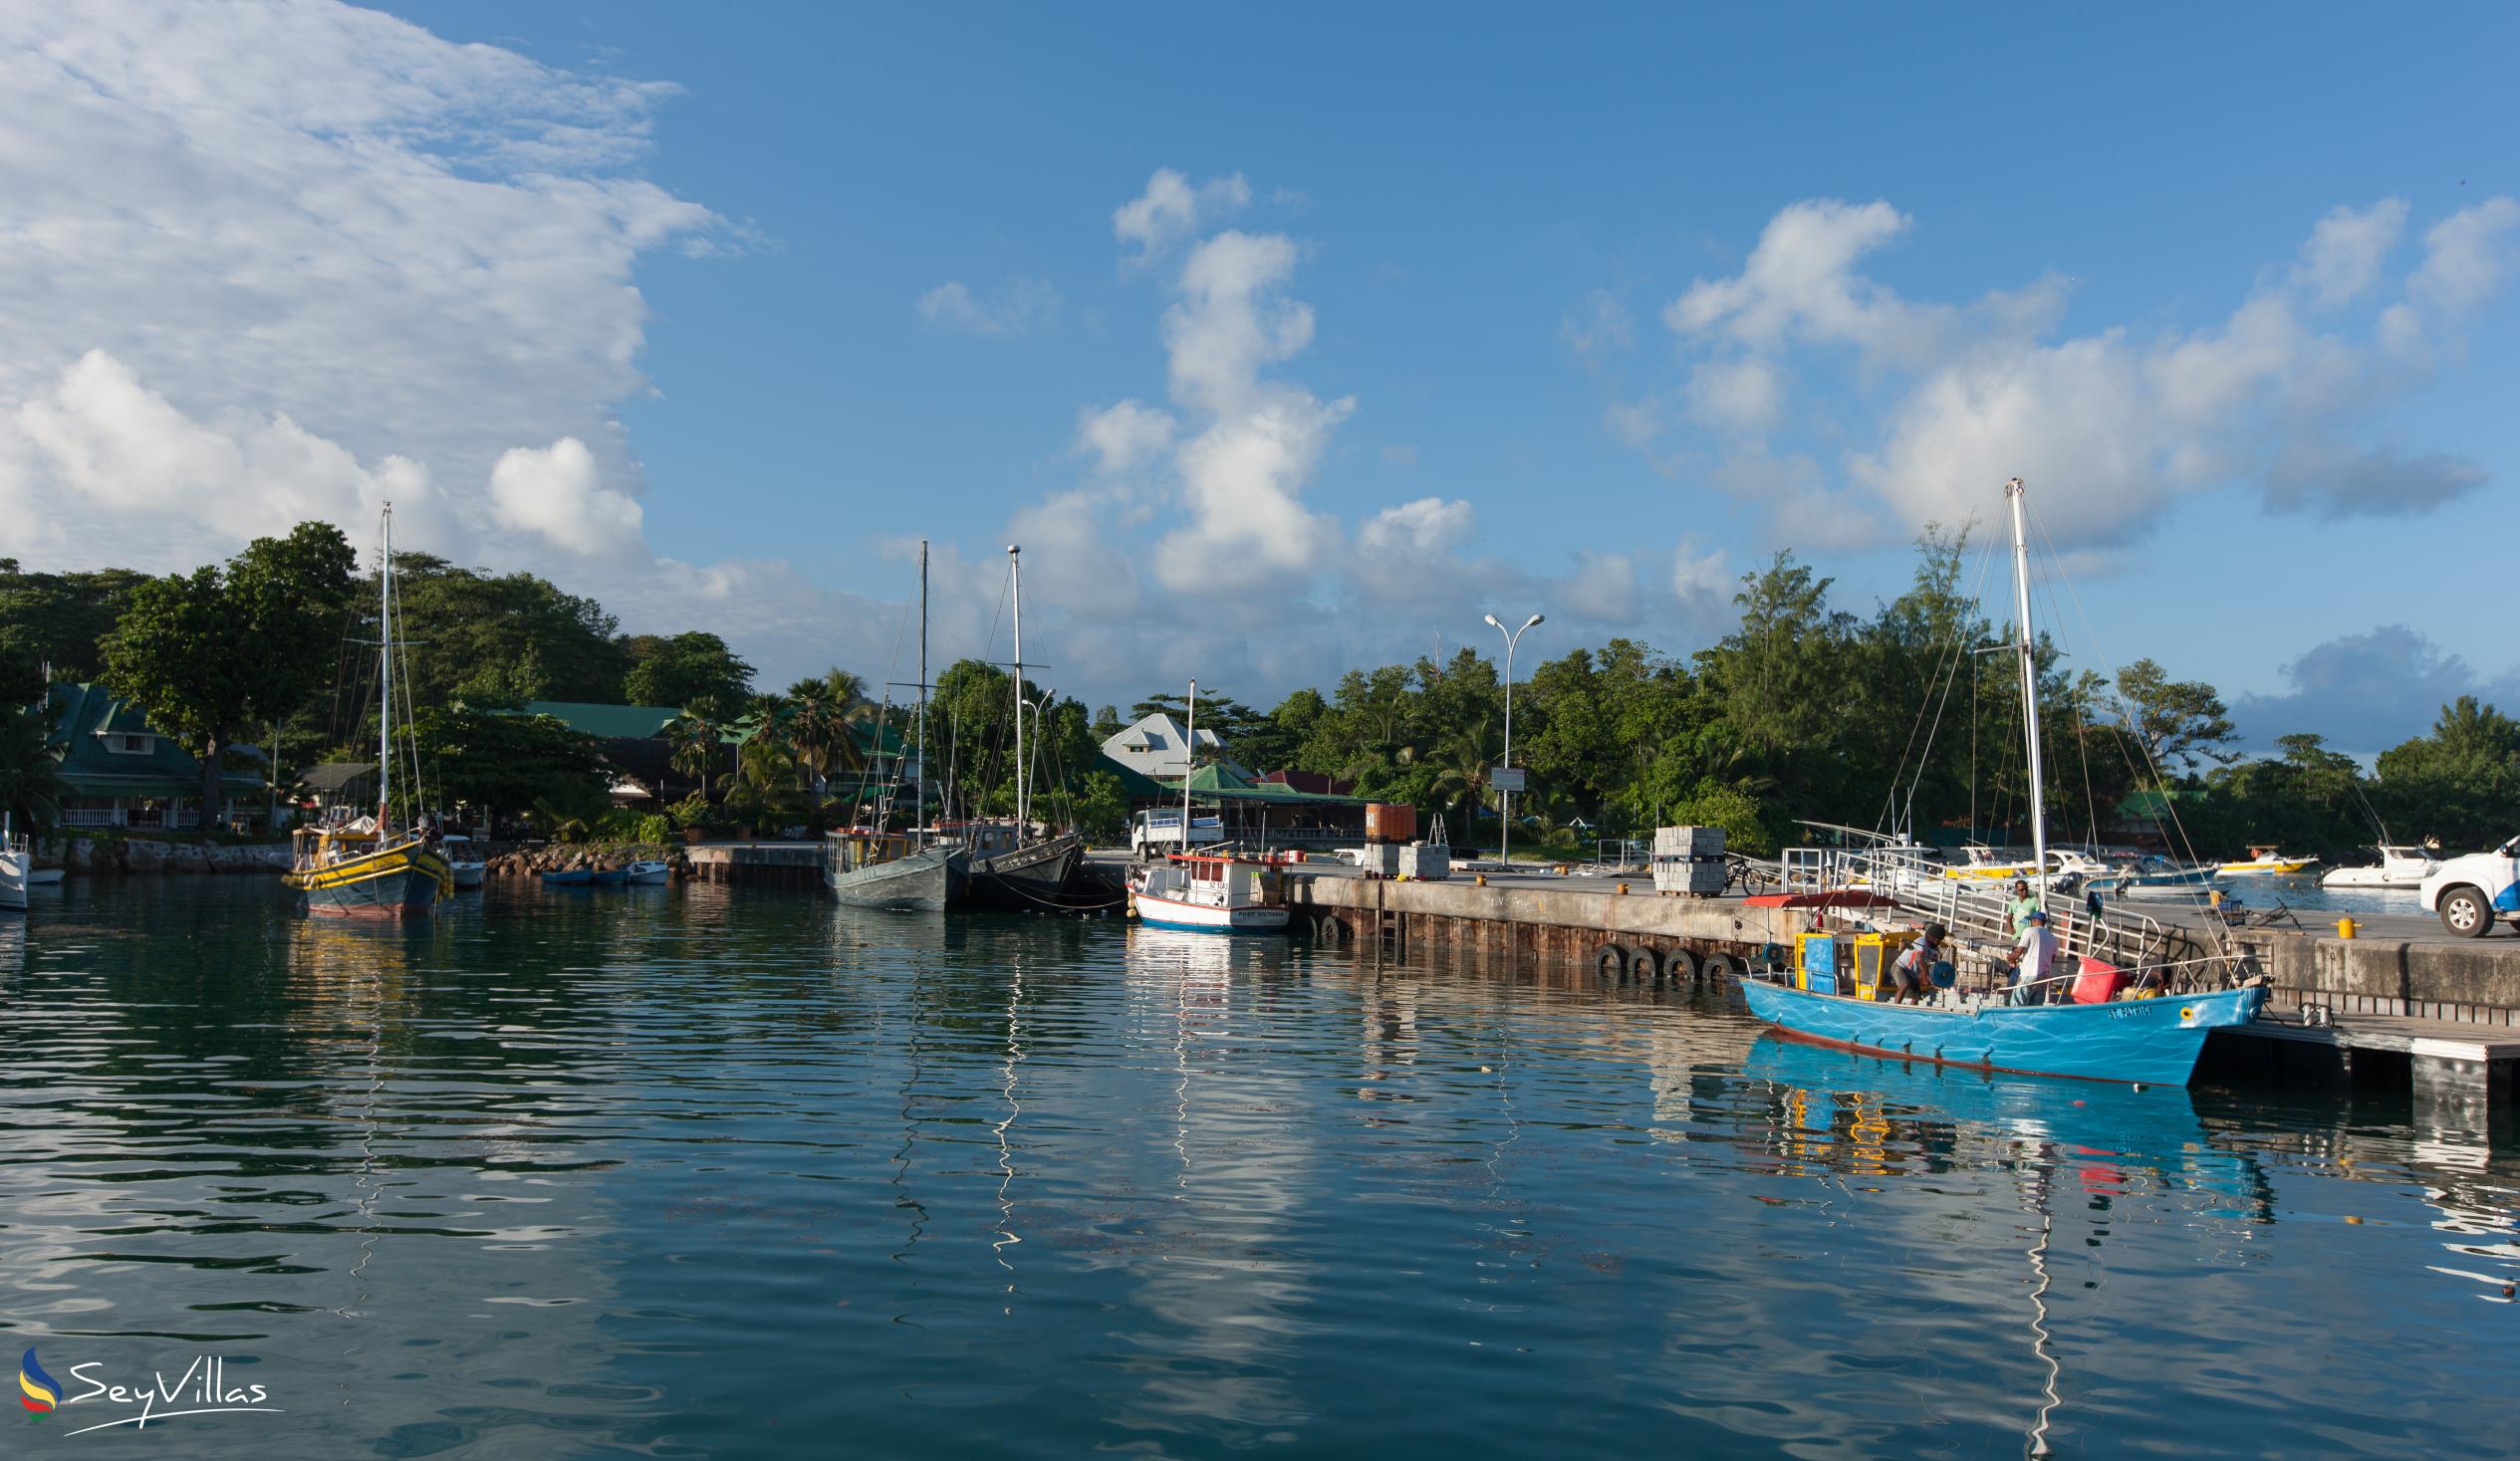 Foto 59: Tannette's Villa - Location - La Digue (Seychelles)